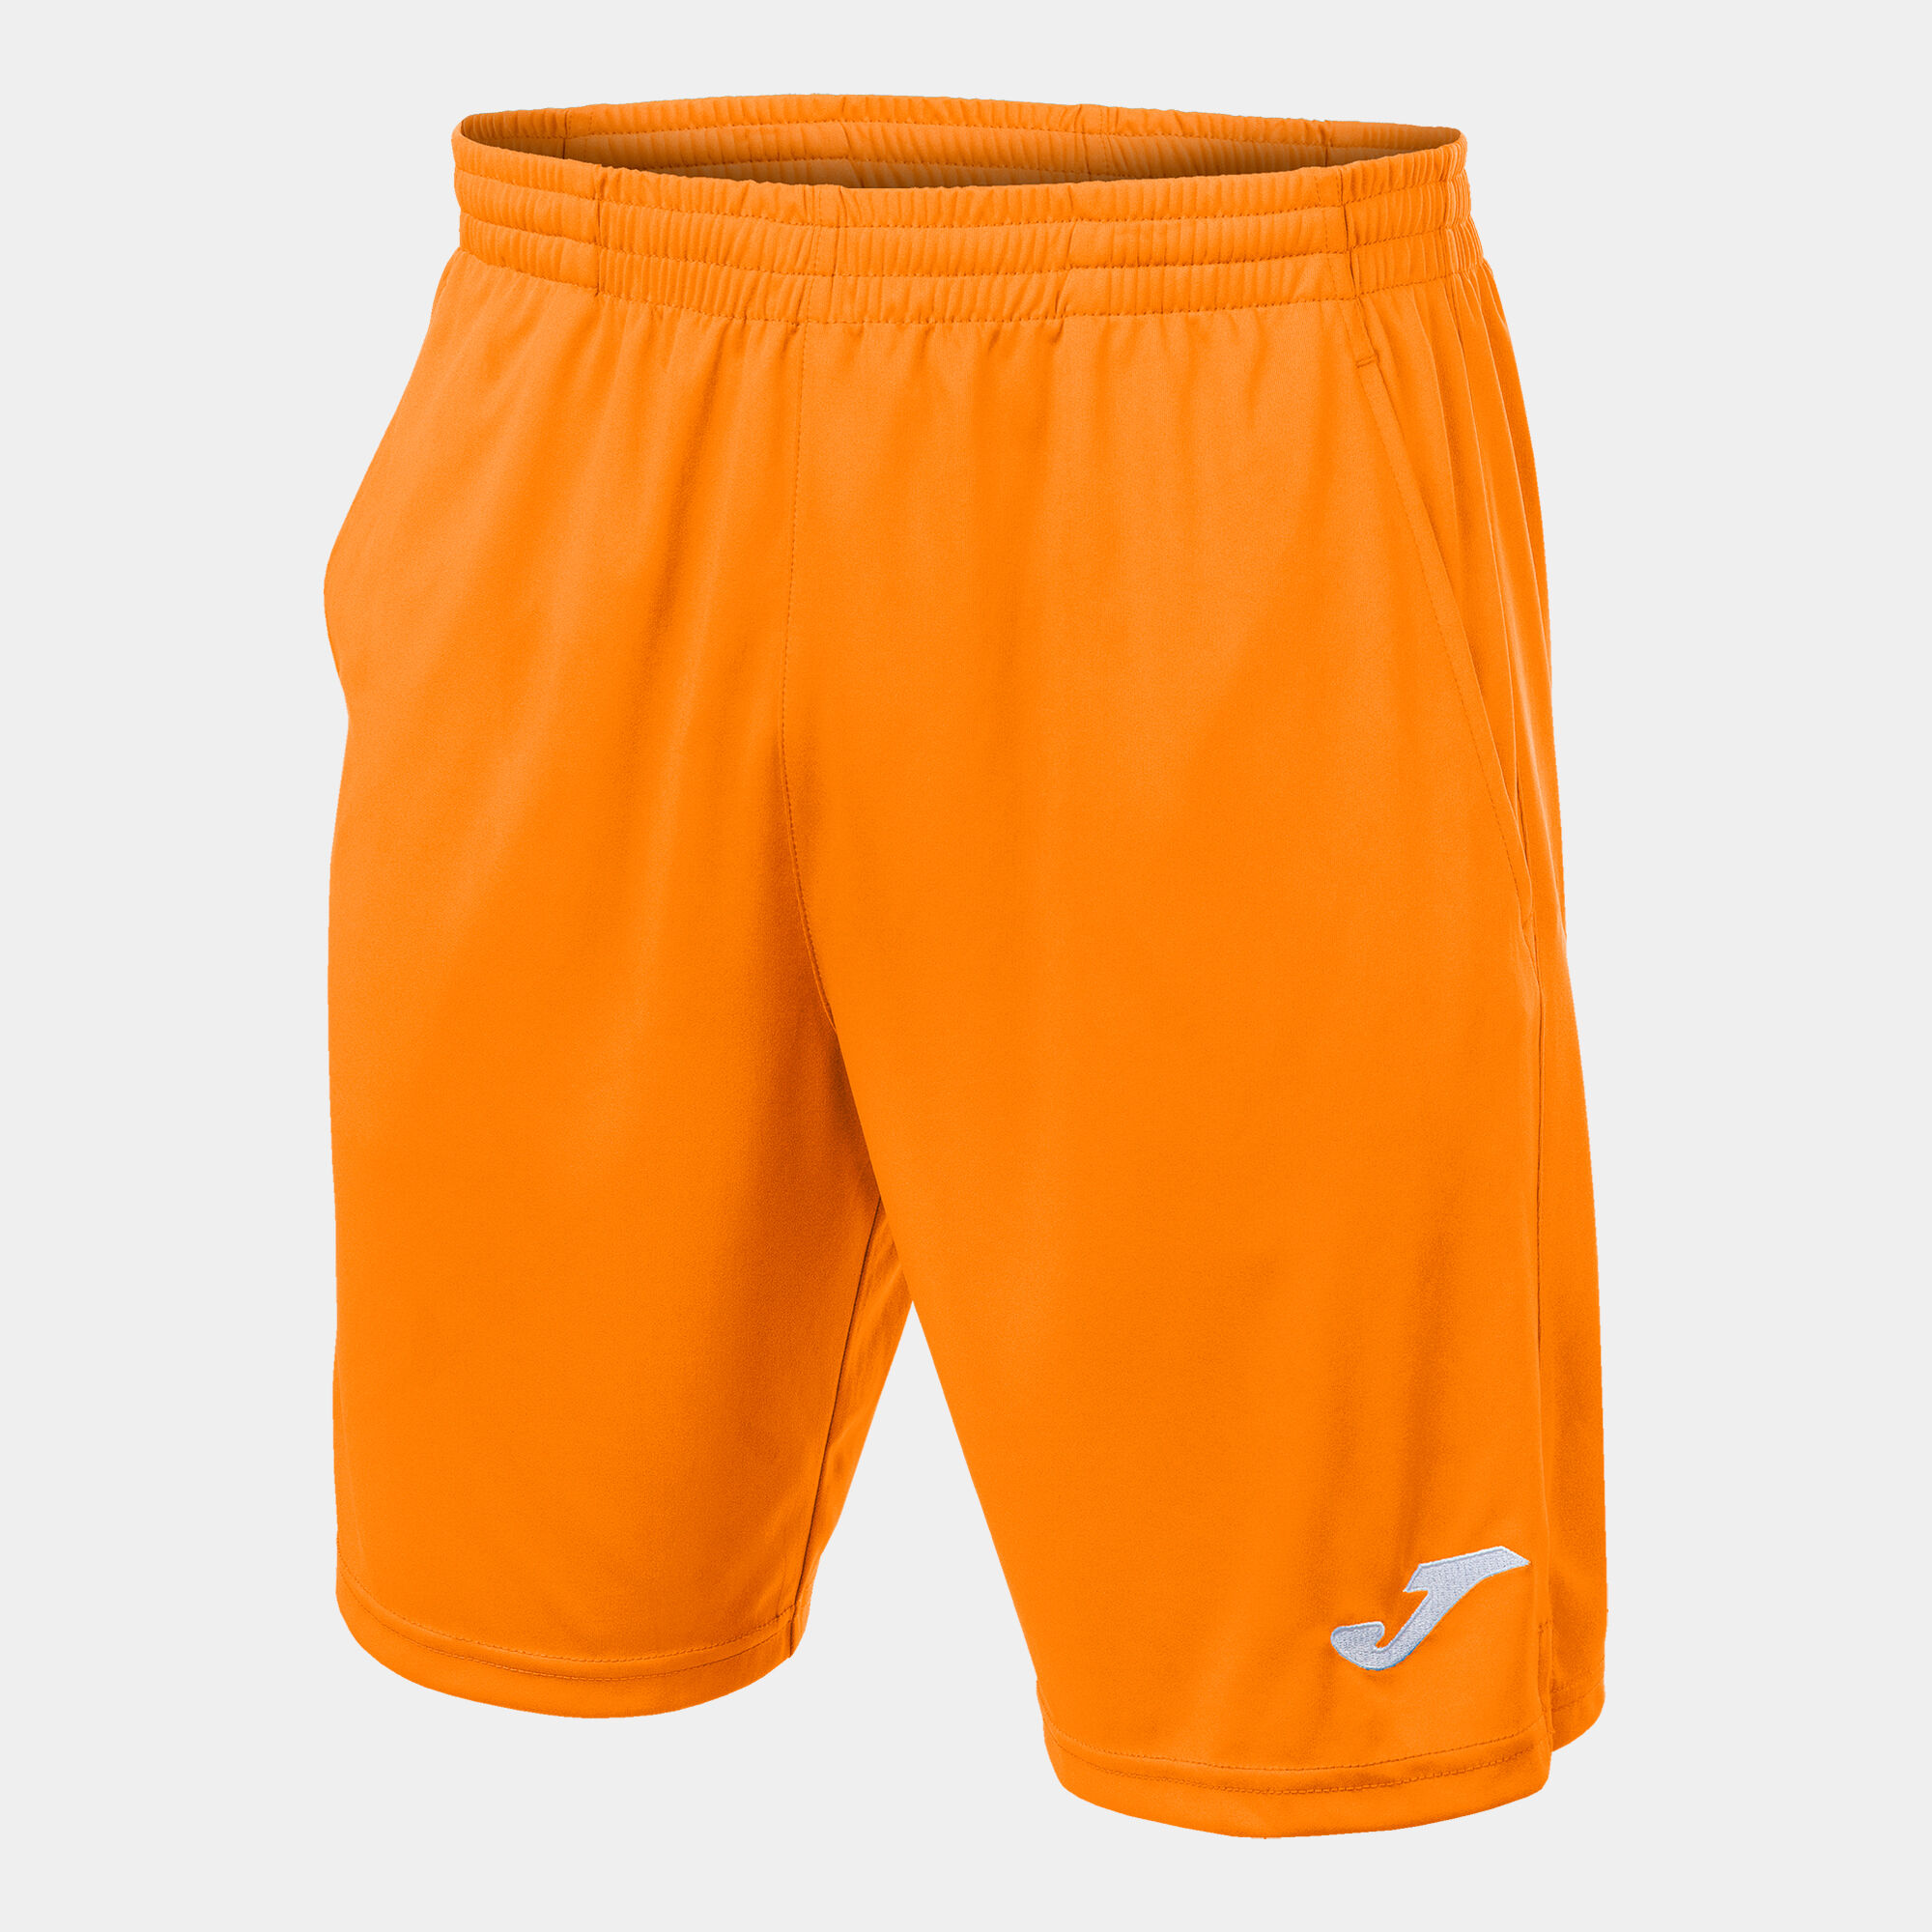 Bermuda shorts man Drive fluorescent orange